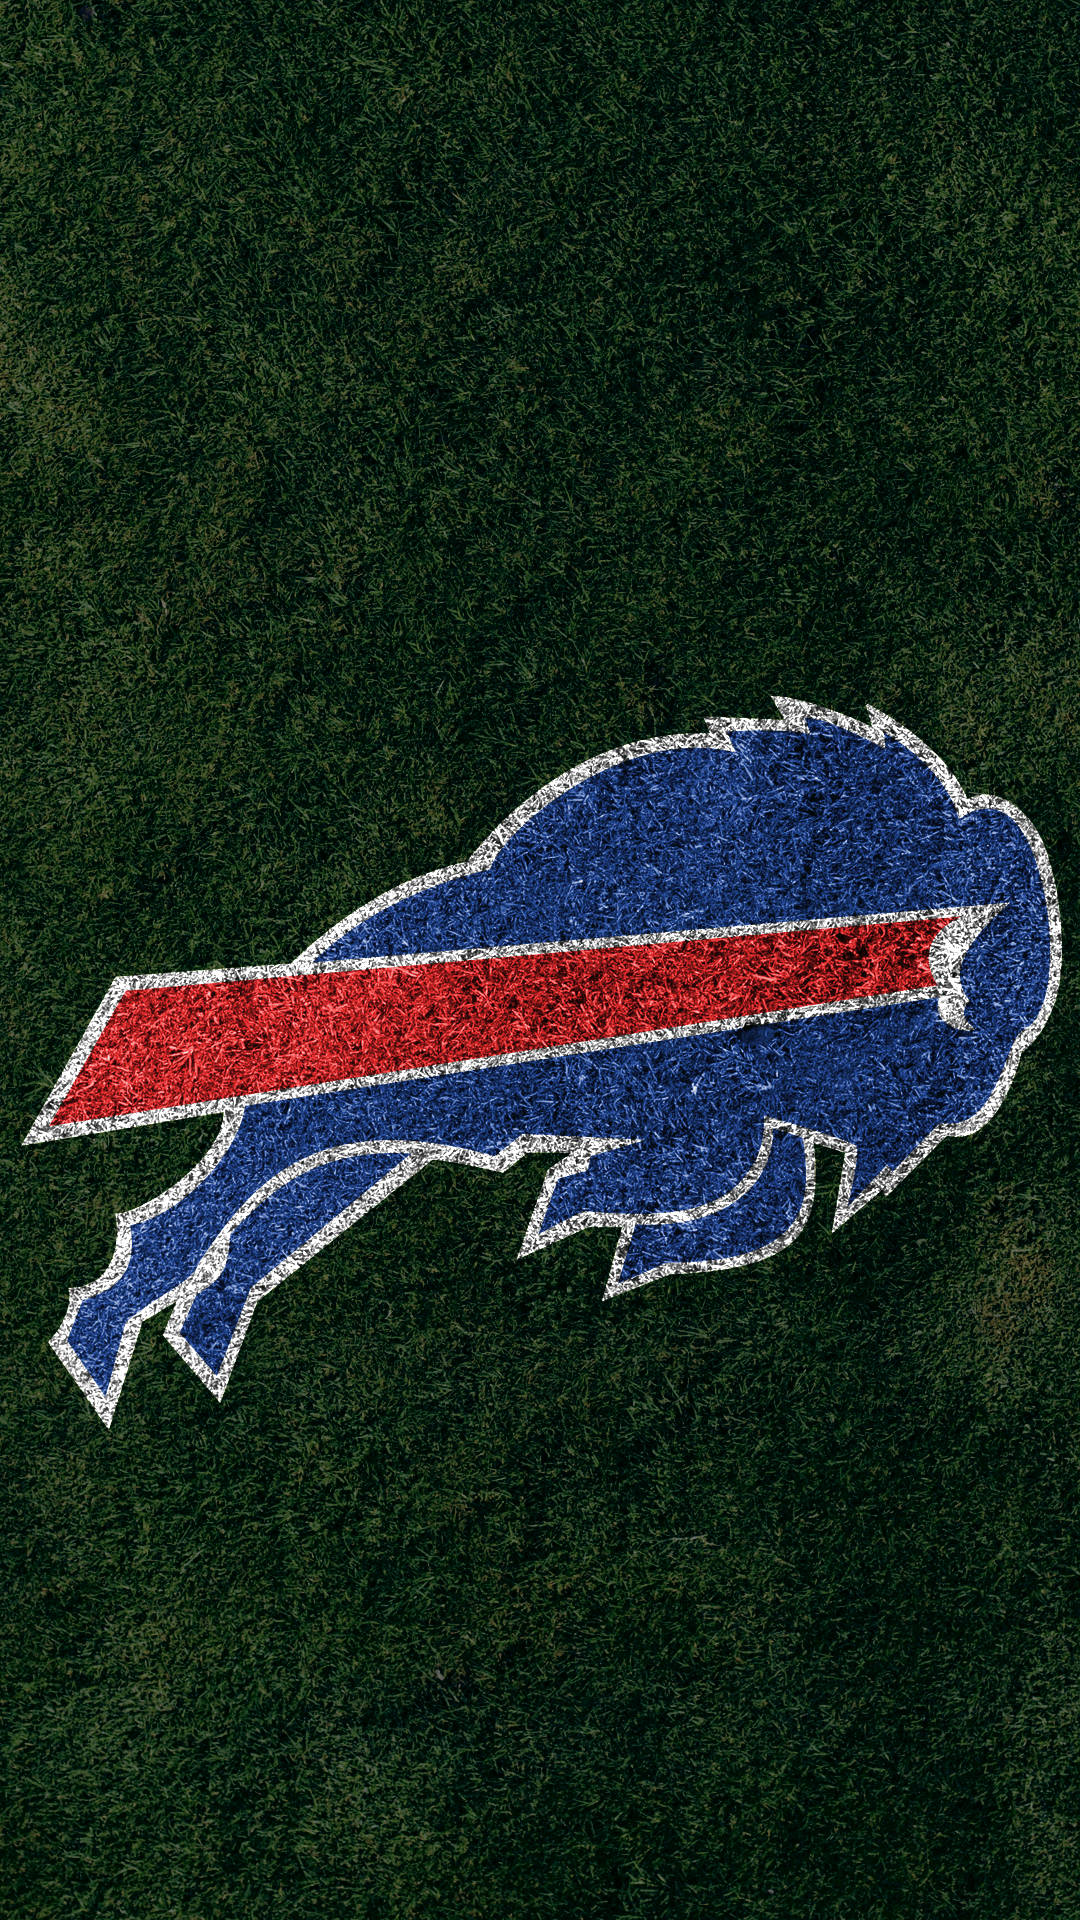 Buffalo Bills Big On The Ground